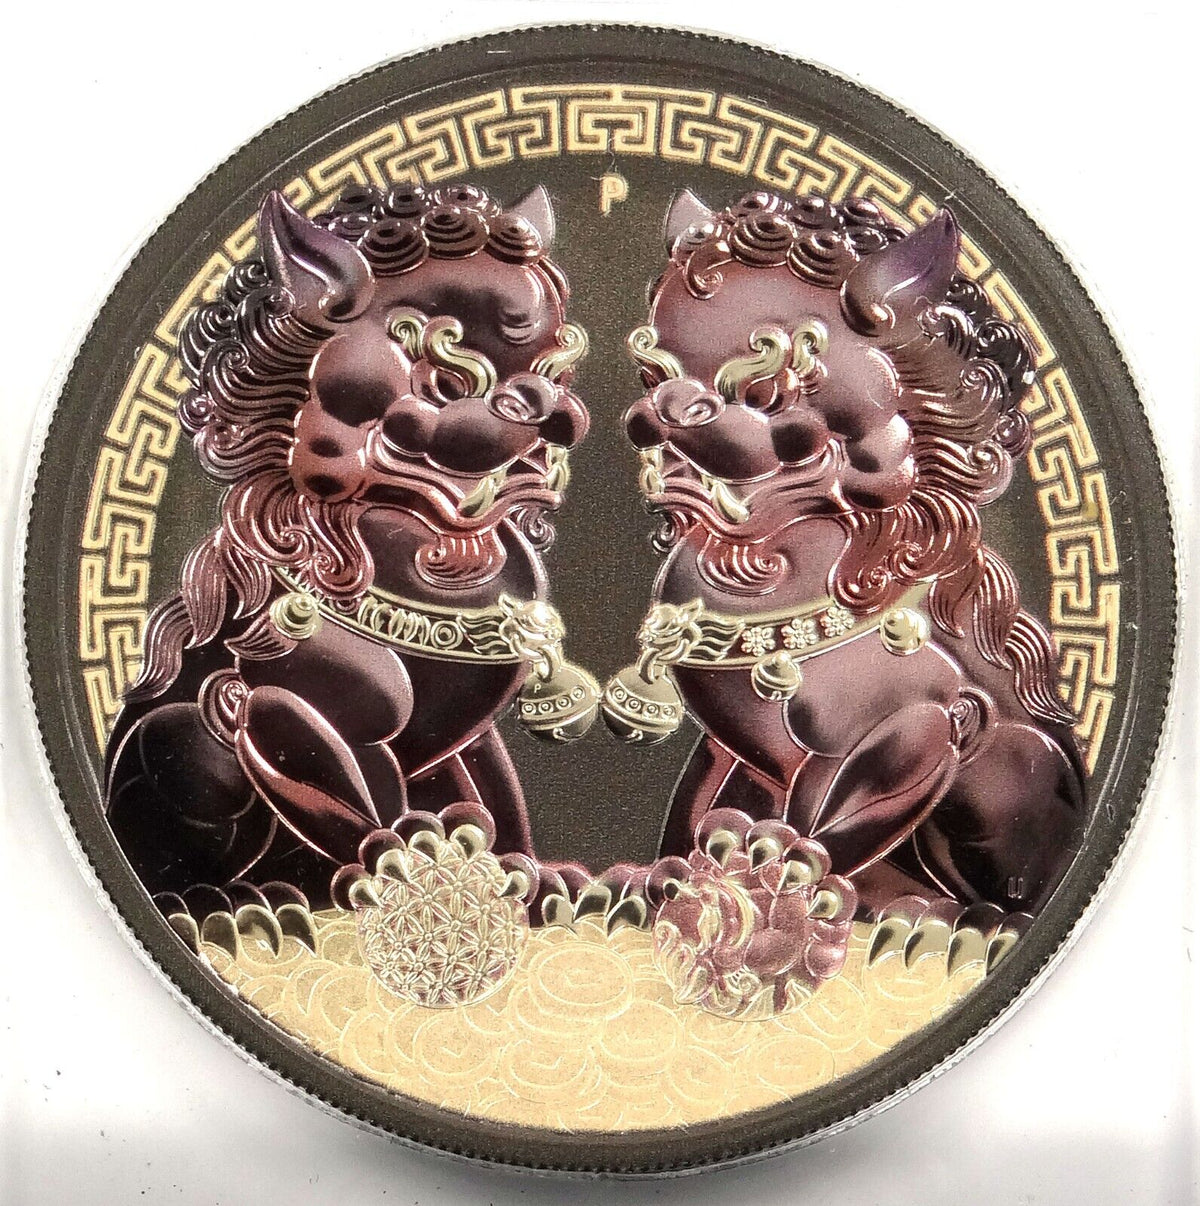 1 Oz Silver Coin 2020 $1 Australia Guardian Sky Lions Pixiu - Dark Red &amp; Gilded-classypw.com-1